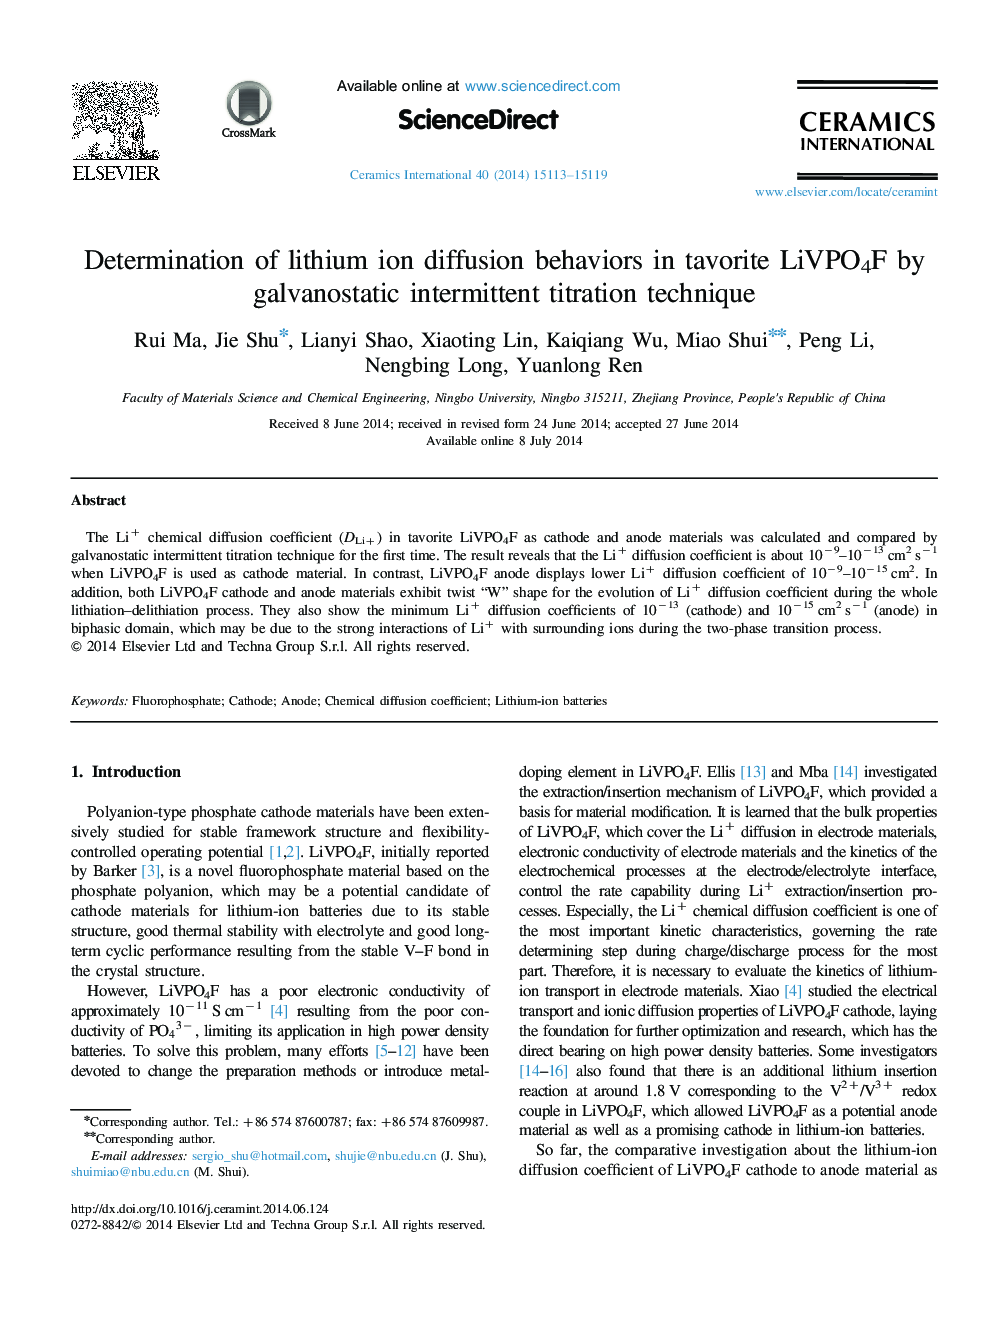 Determination of lithium ion diffusion behaviors in tavorite LiVPO4F by galvanostatic intermittent titration technique